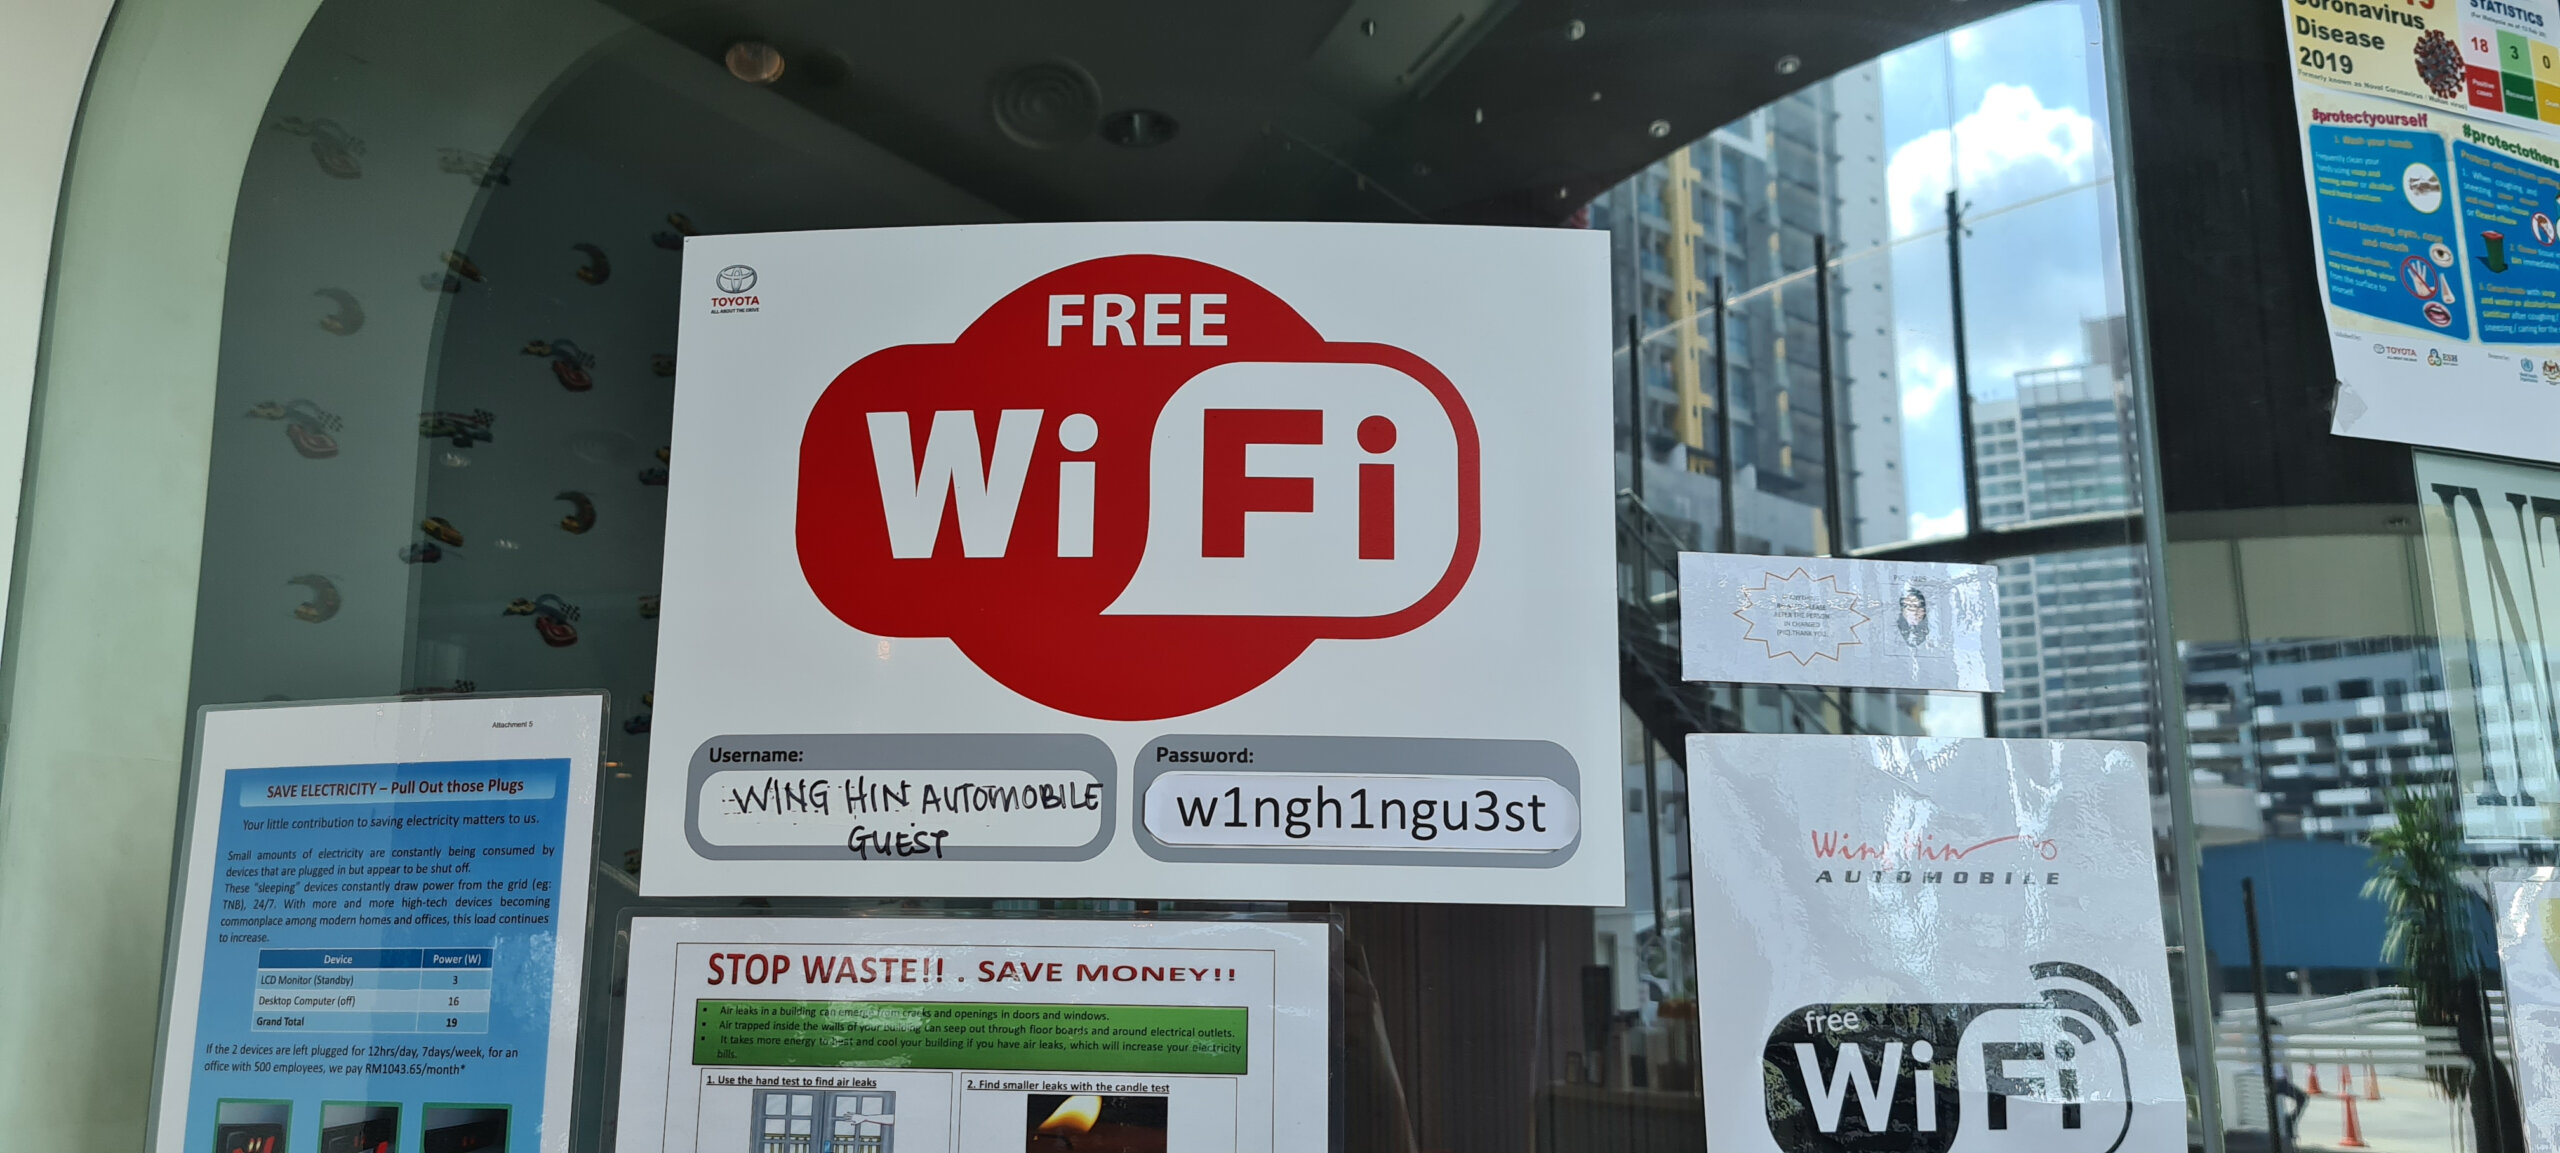 The risk of public wi-fi